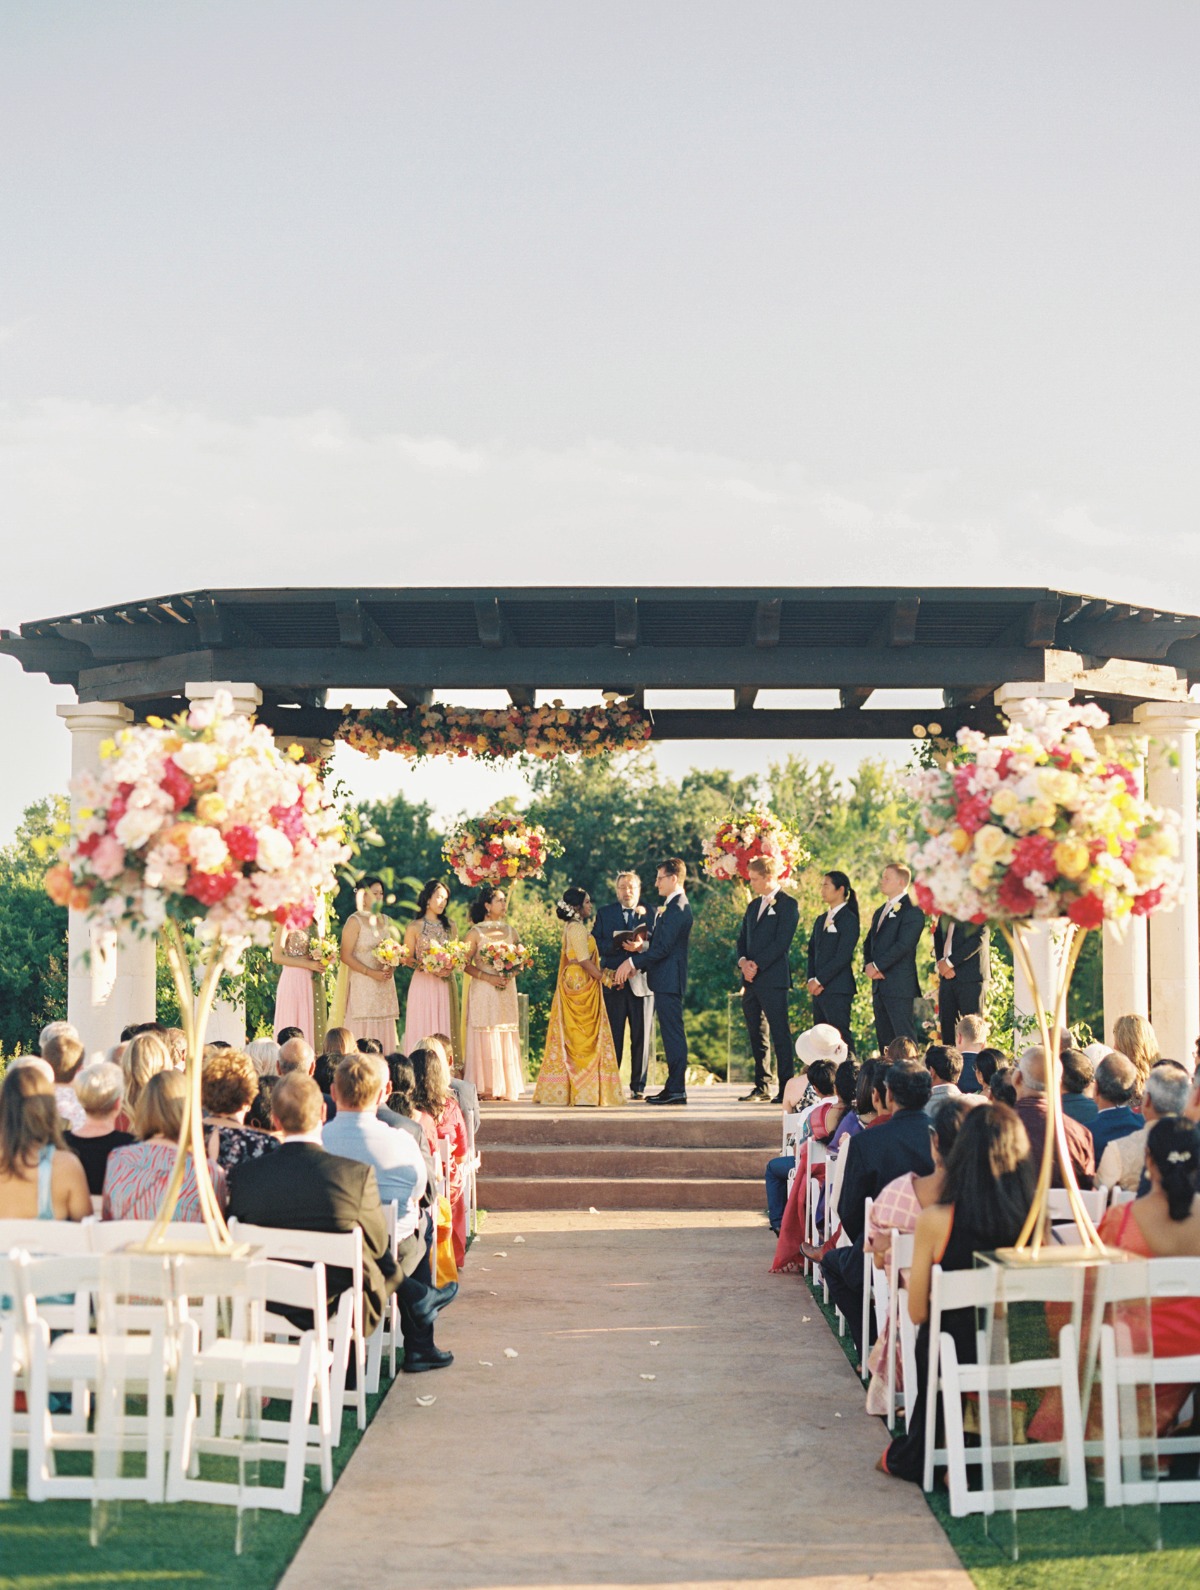 pavilion decor ideas for your wedding ceremony